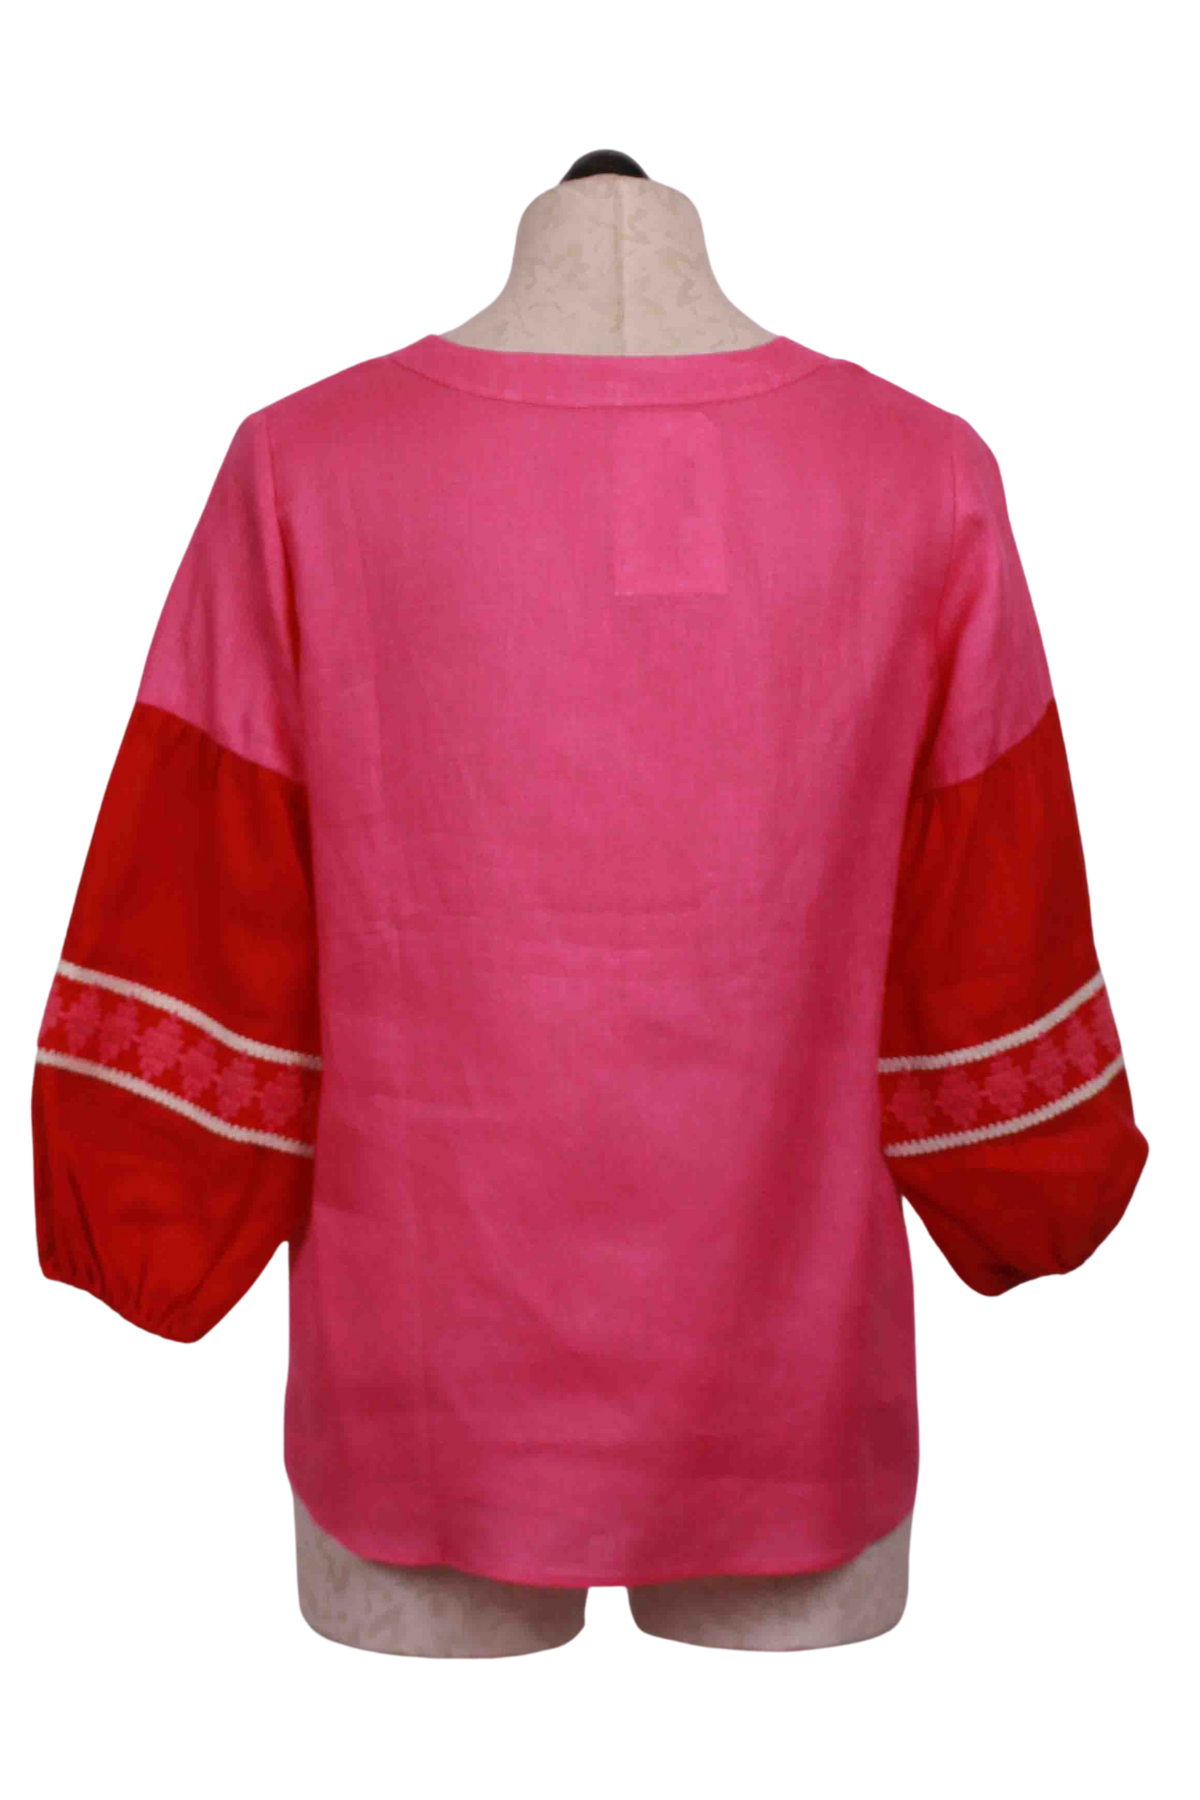 back view of Kaya Pink/Red Linen Shirt by Vilagallo